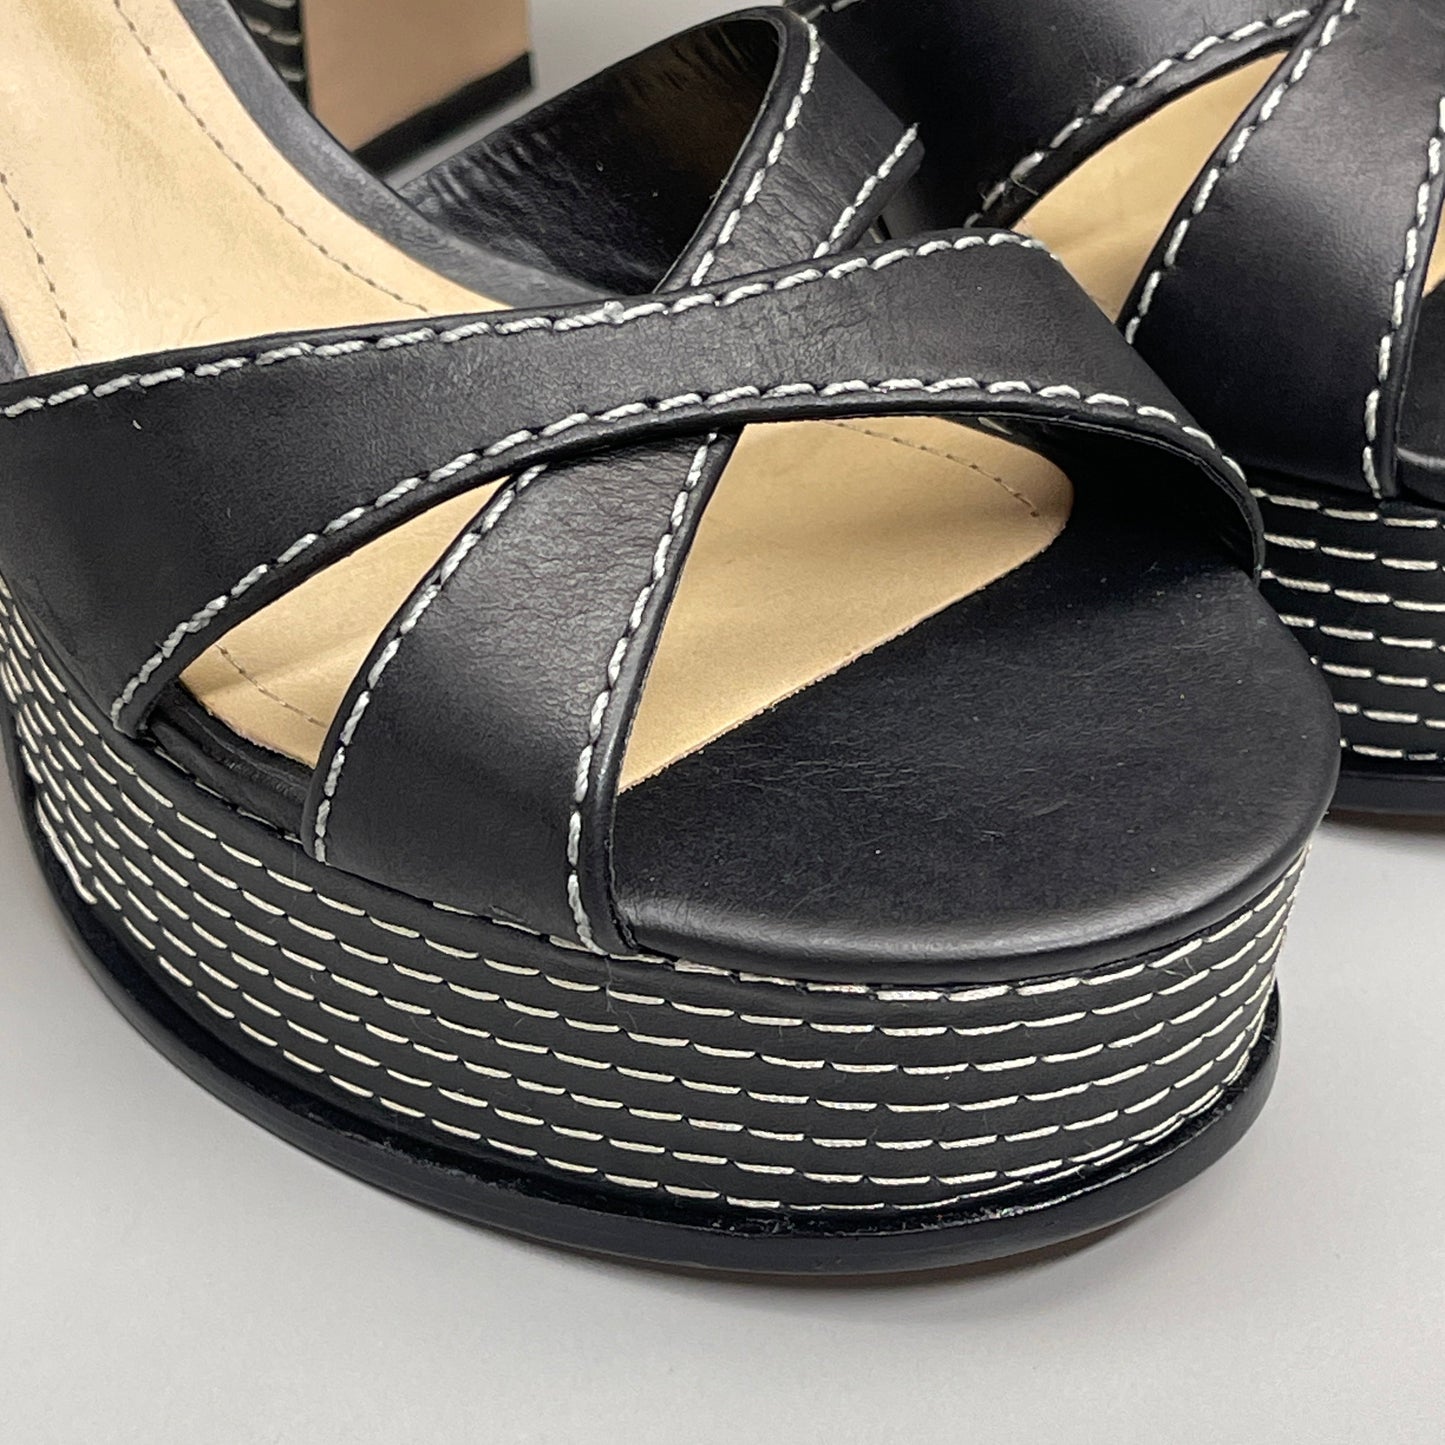 SCHUTZ Keefa Casual Women's Leather Sandal Black Platform 4" Heel Shoes Sz 5B (New)